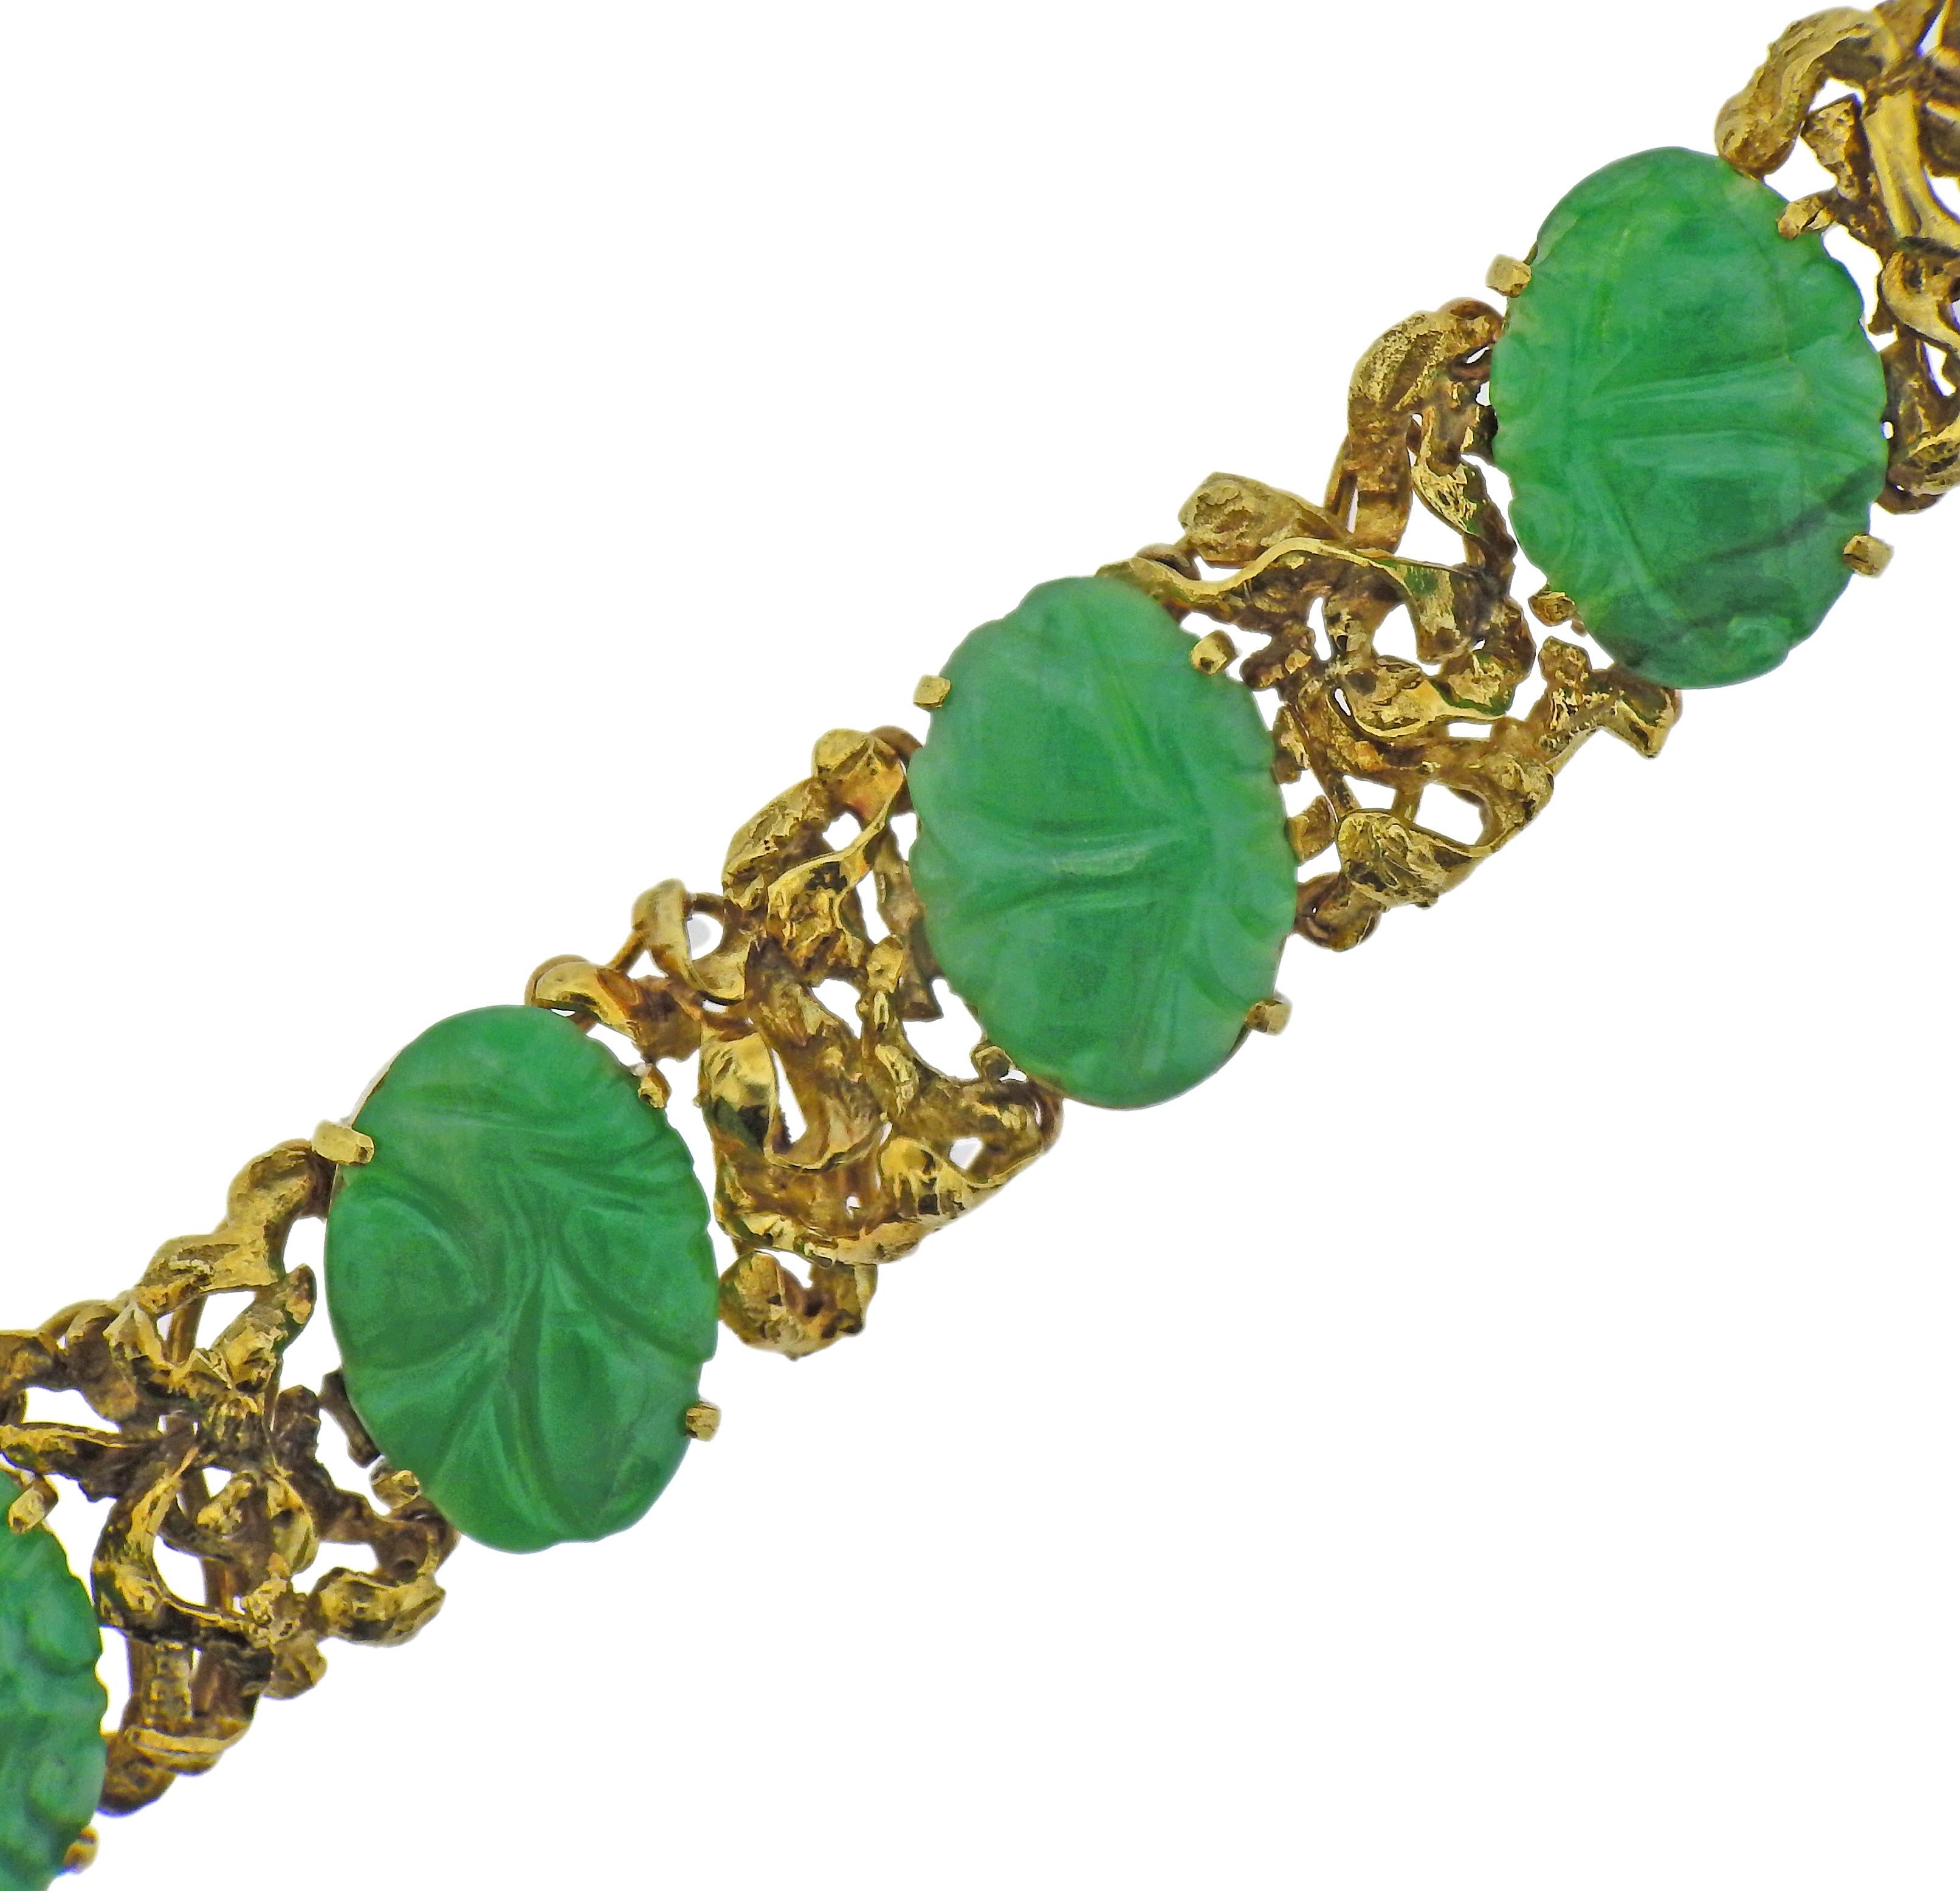 18k yellow gold bracelet with carved jade. Bracelet is 7